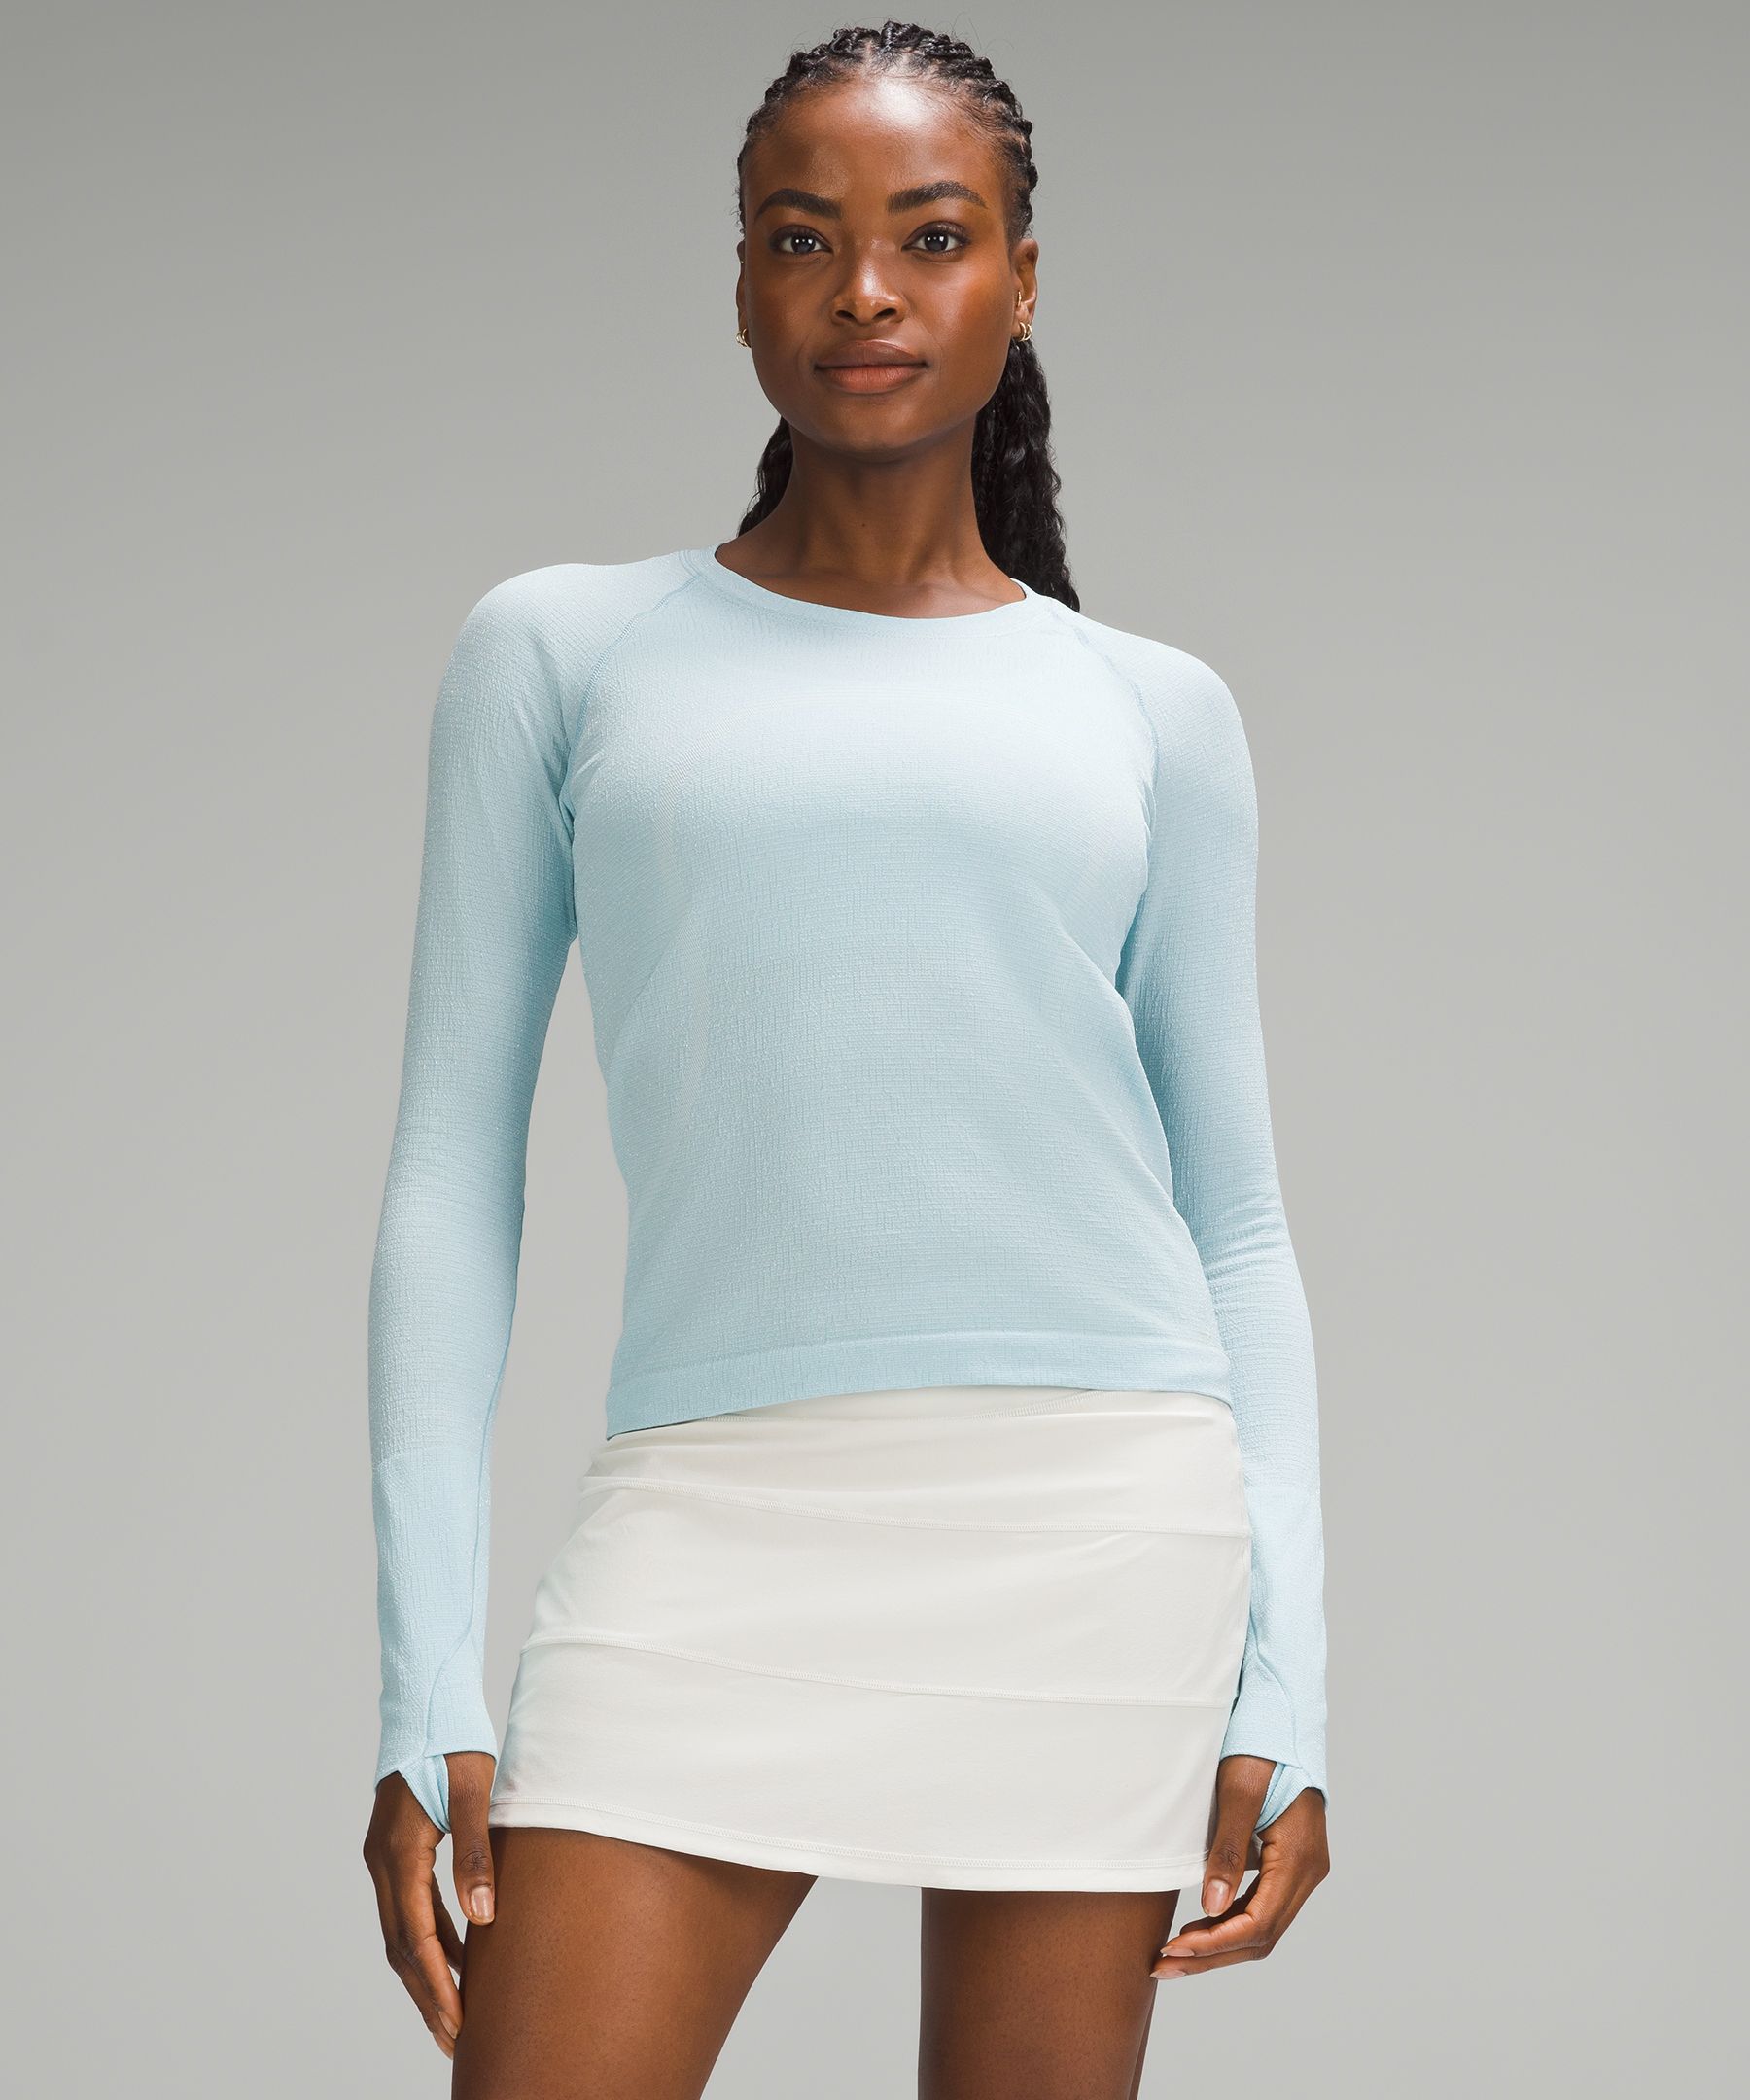 Swiftly Tech Long-Sleeve Shirt 2.0 *Race Length, Women's Long Sleeve  Shirts